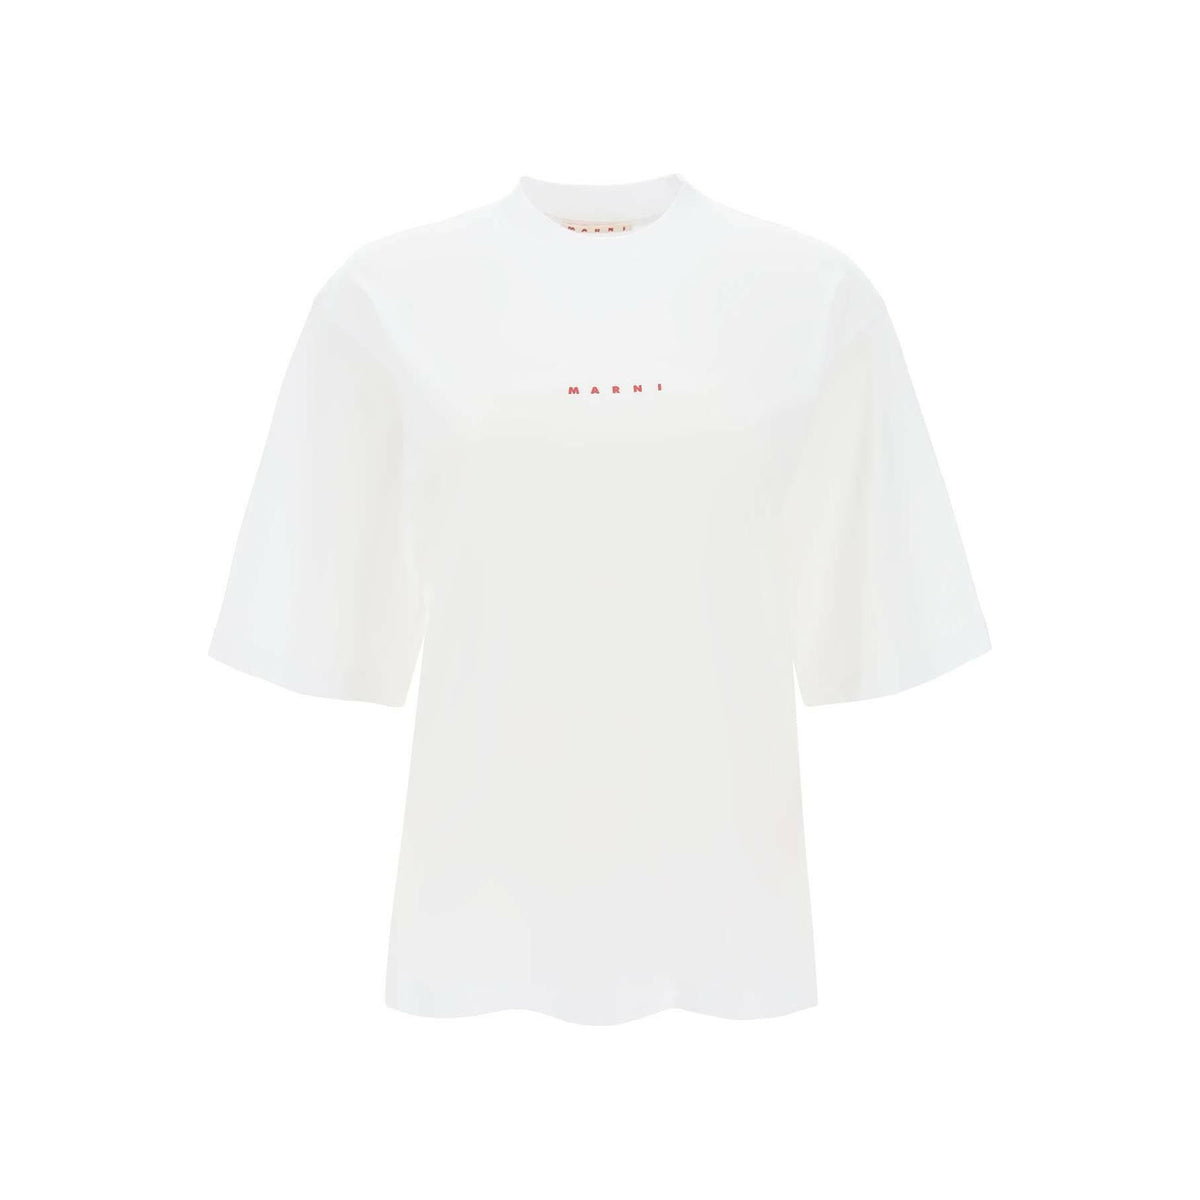 MARNI - Lily White Organic Cotton Logo T-Shirt - JOHN JULIA